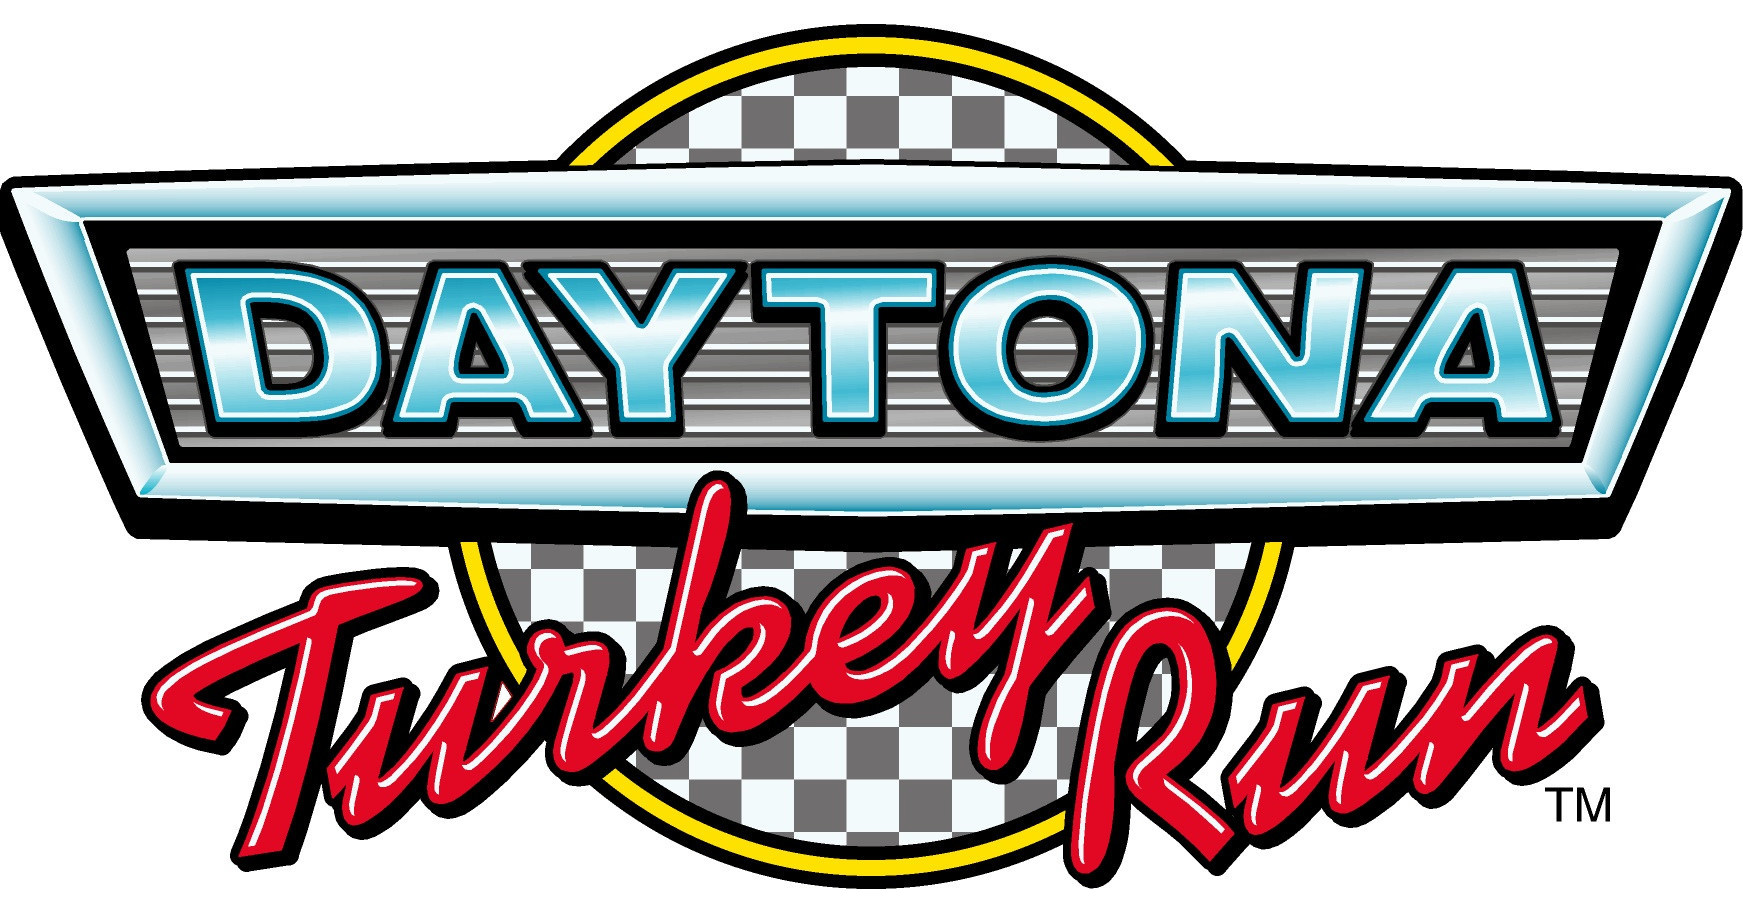 The 46th Annual Daytona Turkey Run